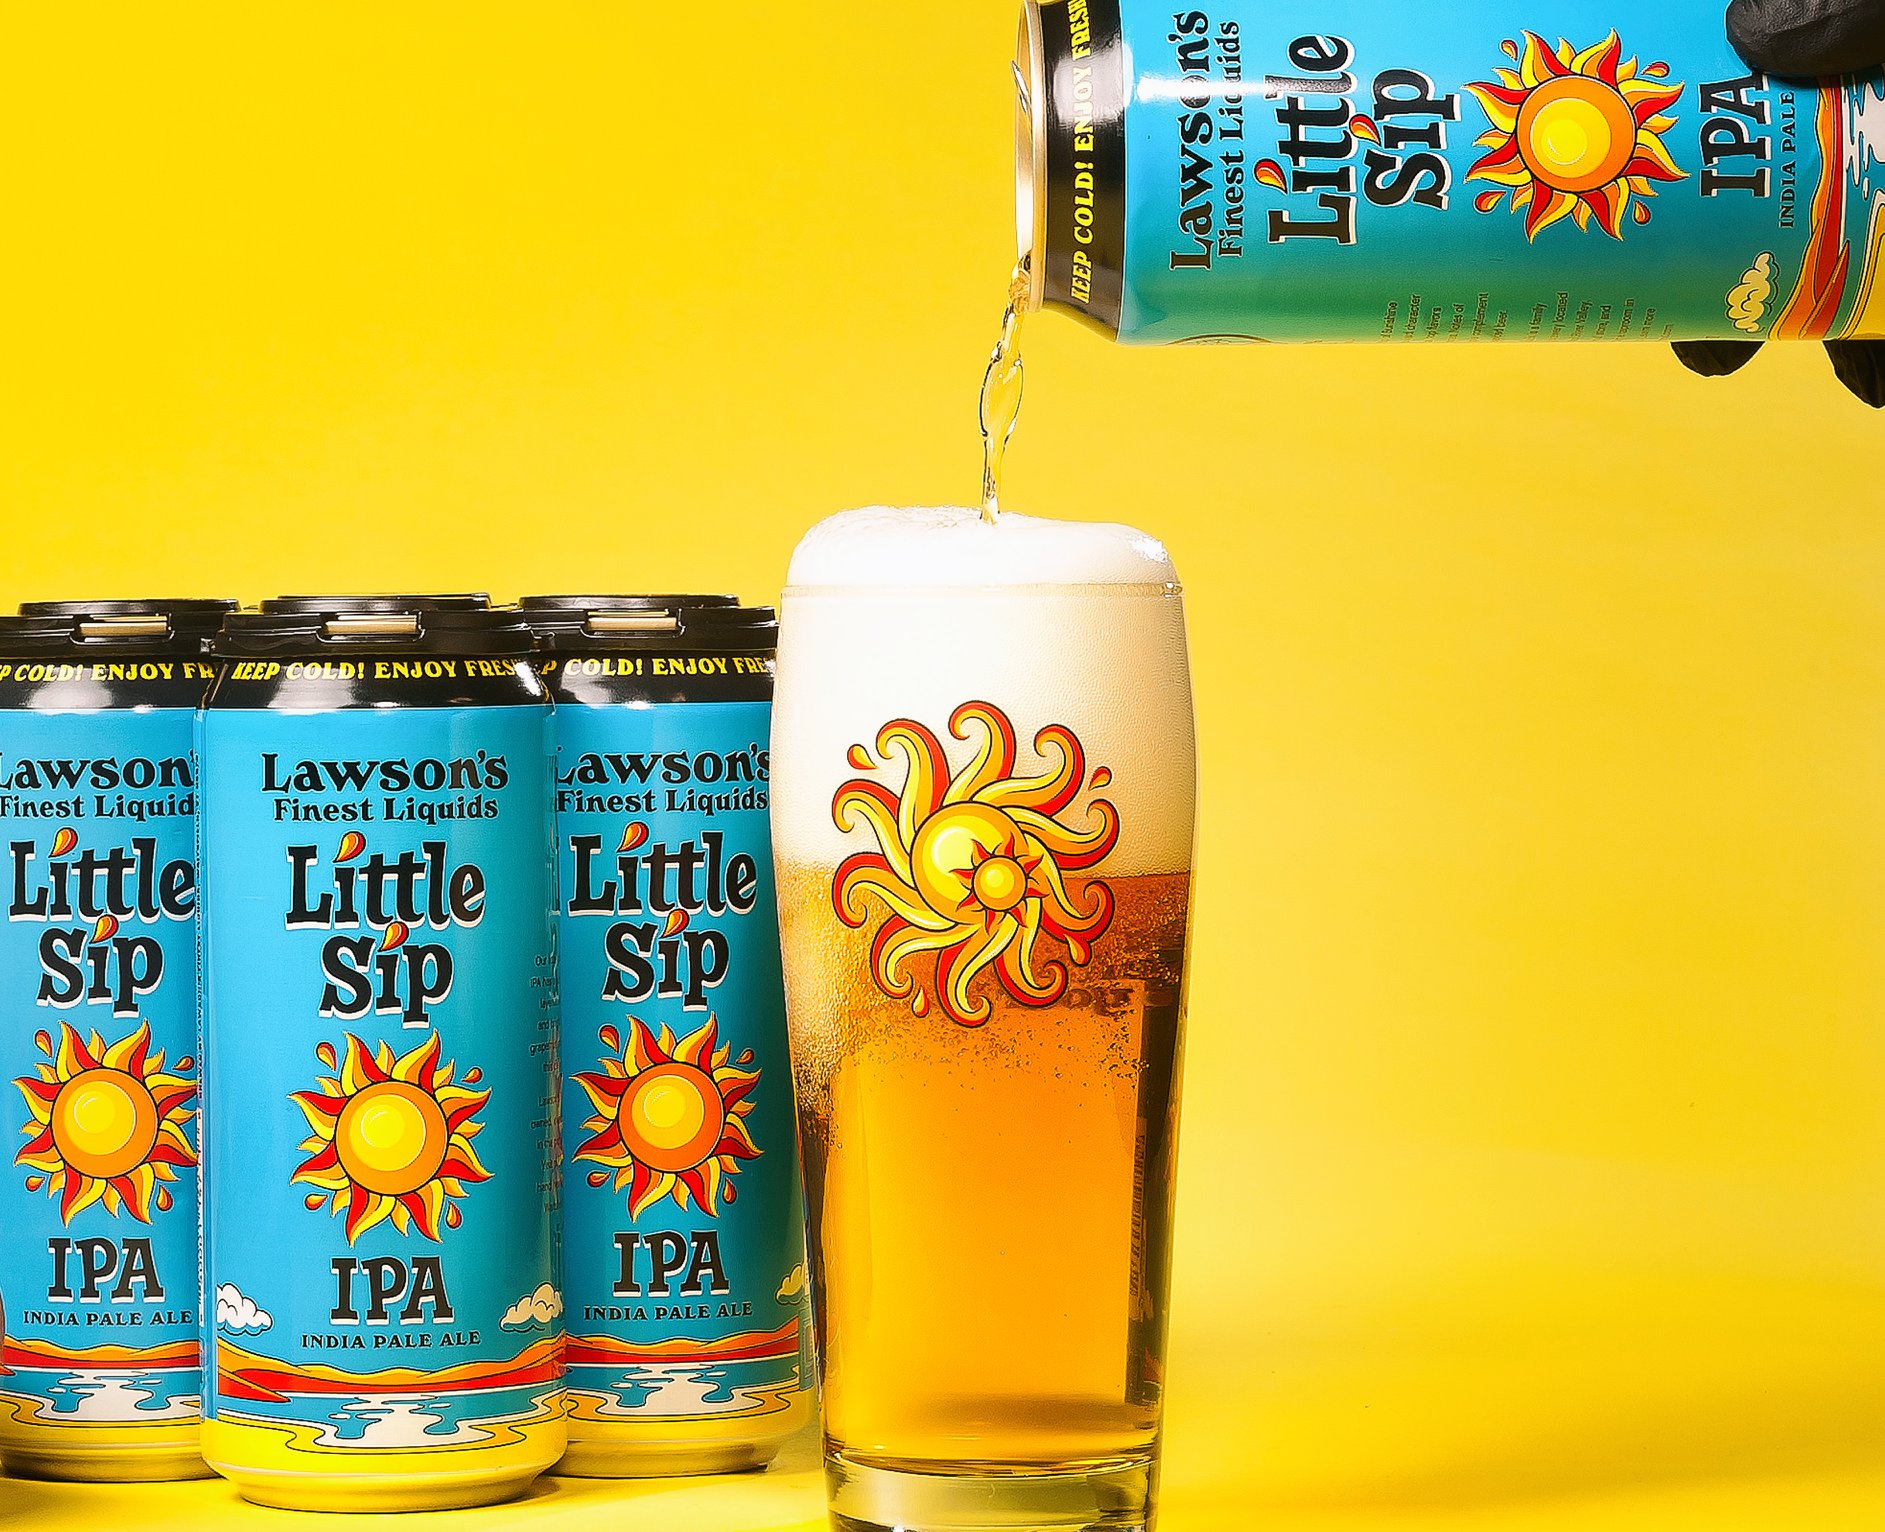 April Beer News - Lawson's Finest Liquids